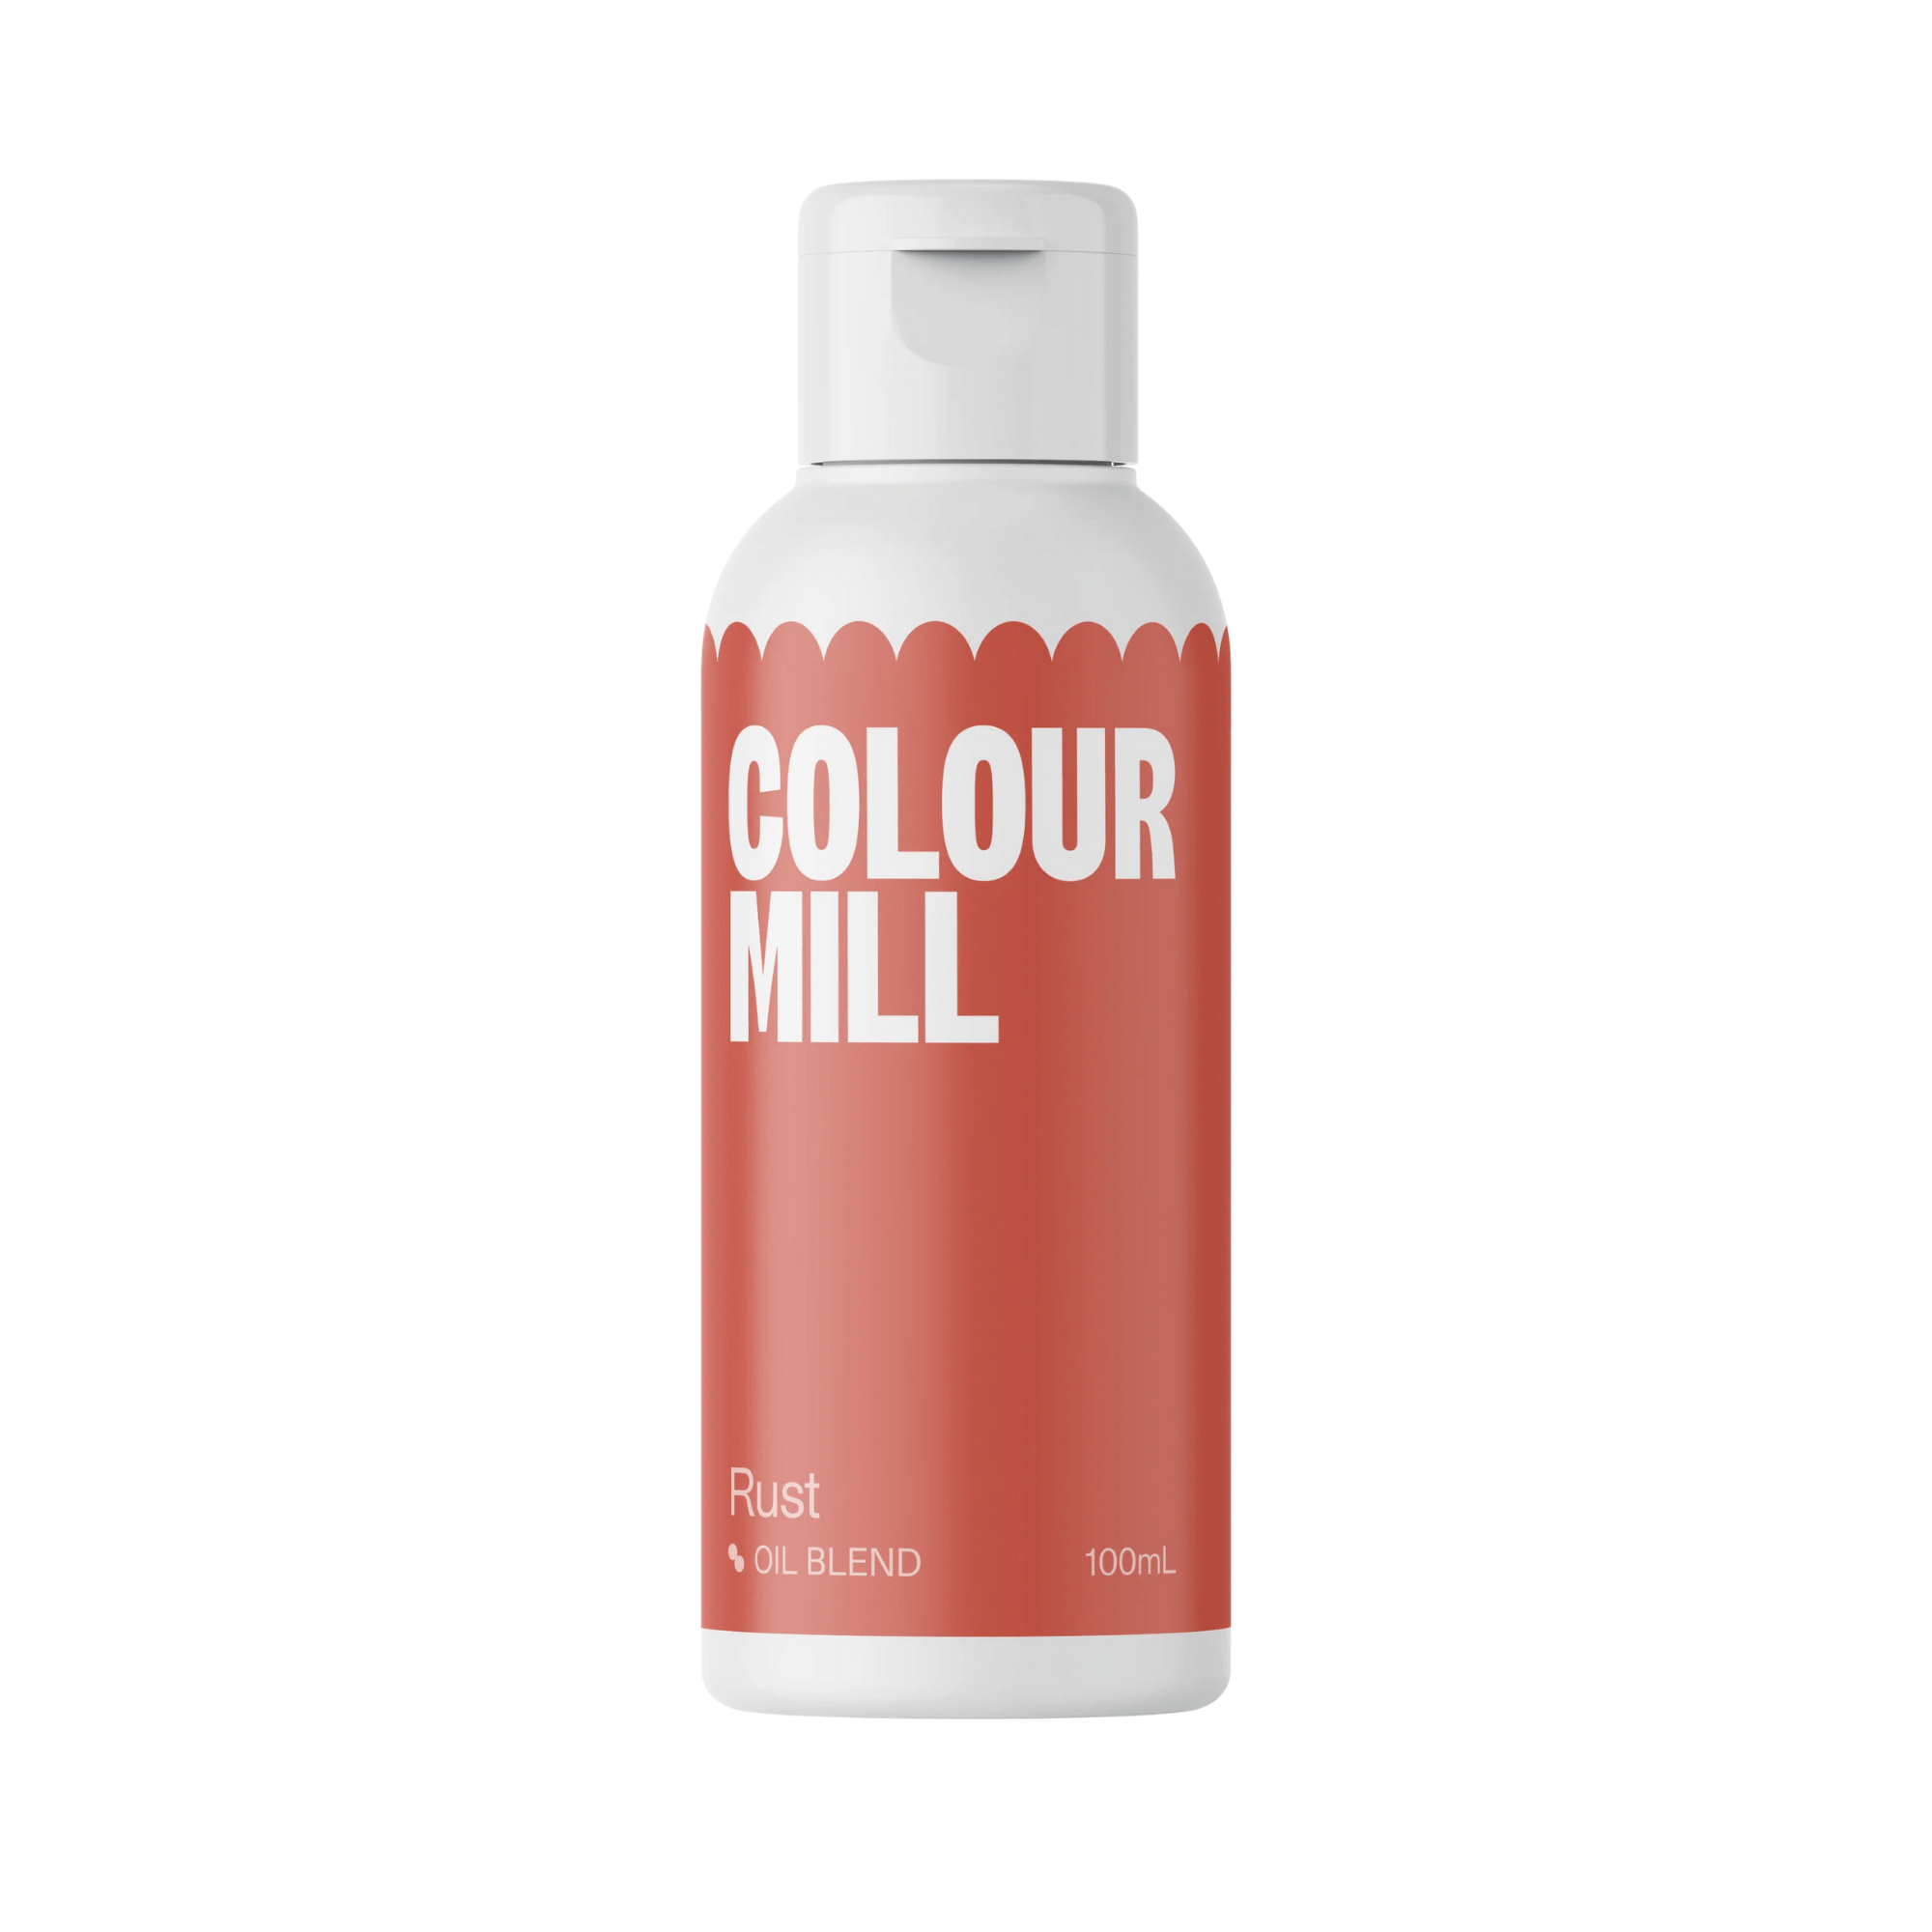 Happy Sprinkles Streusel 100ml Colour Mill Rust - Oil Blend